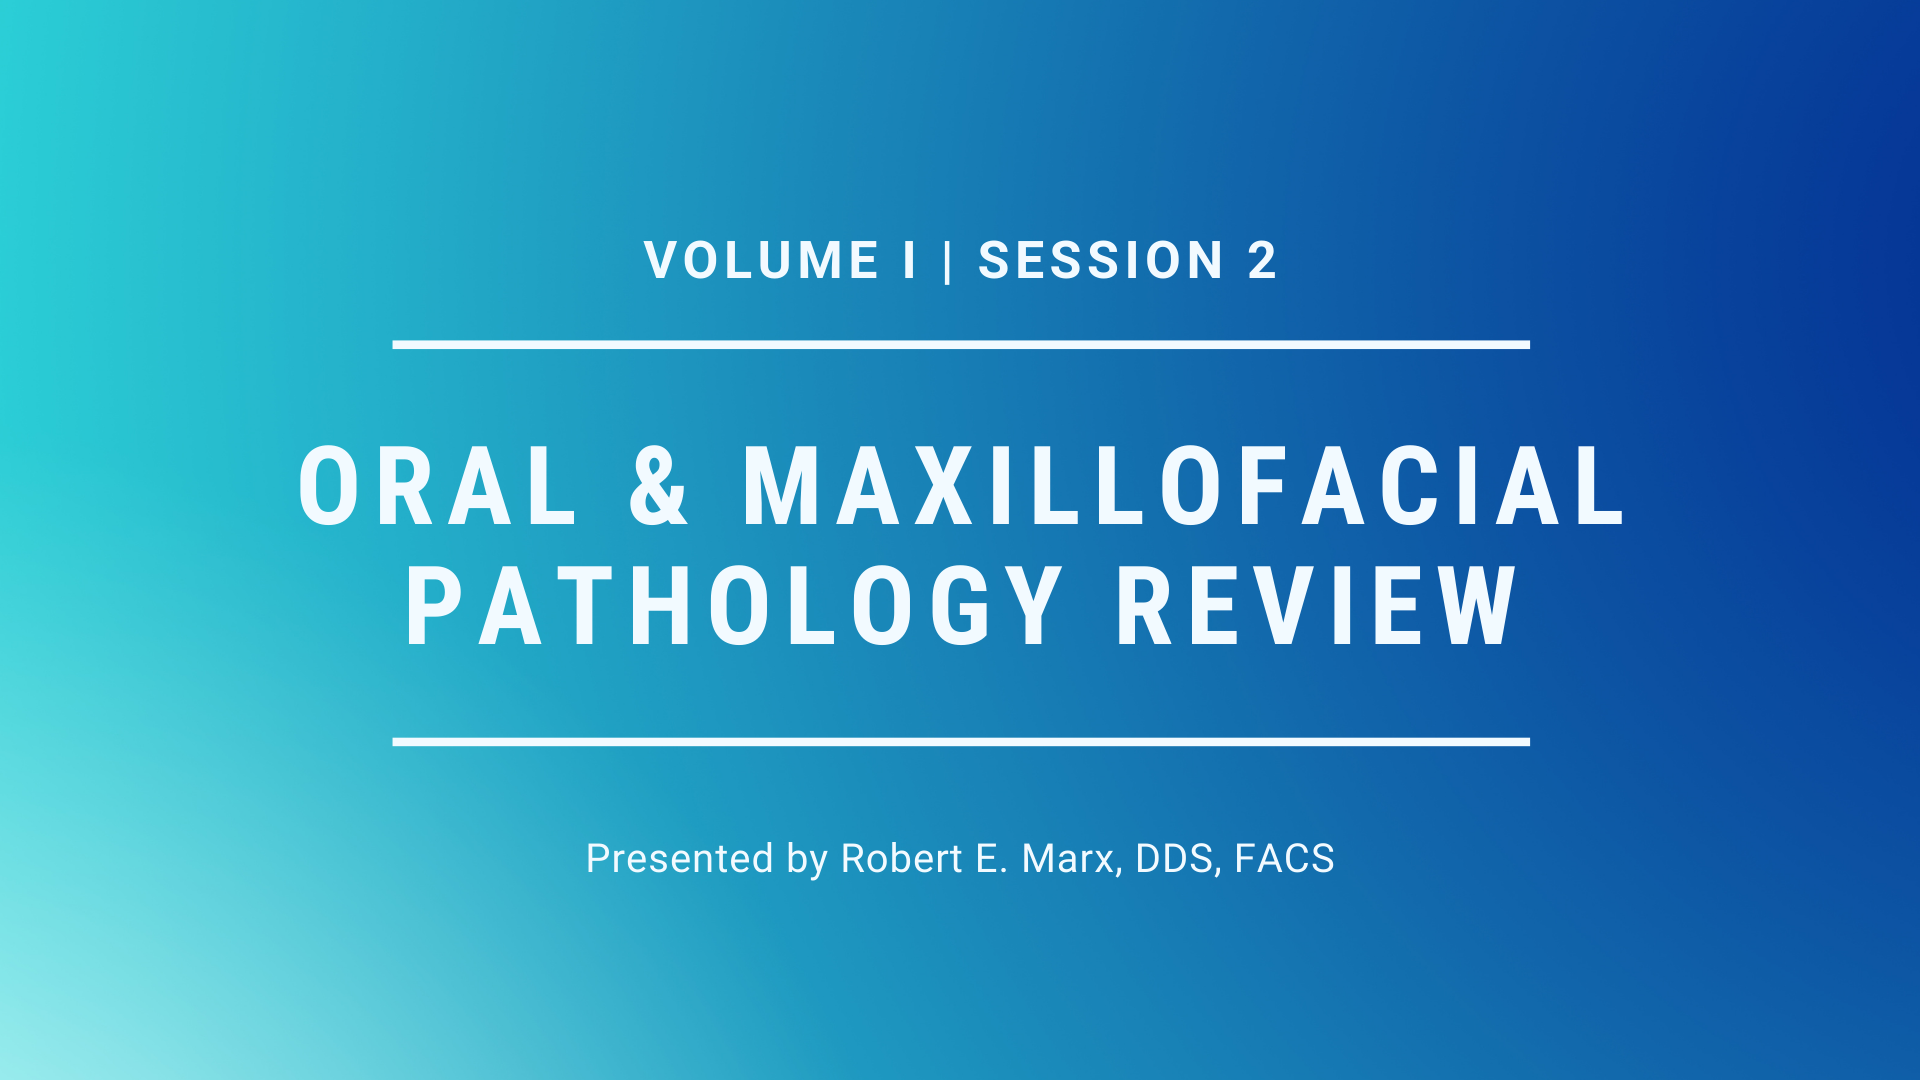 Oral & Maxillofacial Pathology Review – Volume I (OMFS) - Session 2